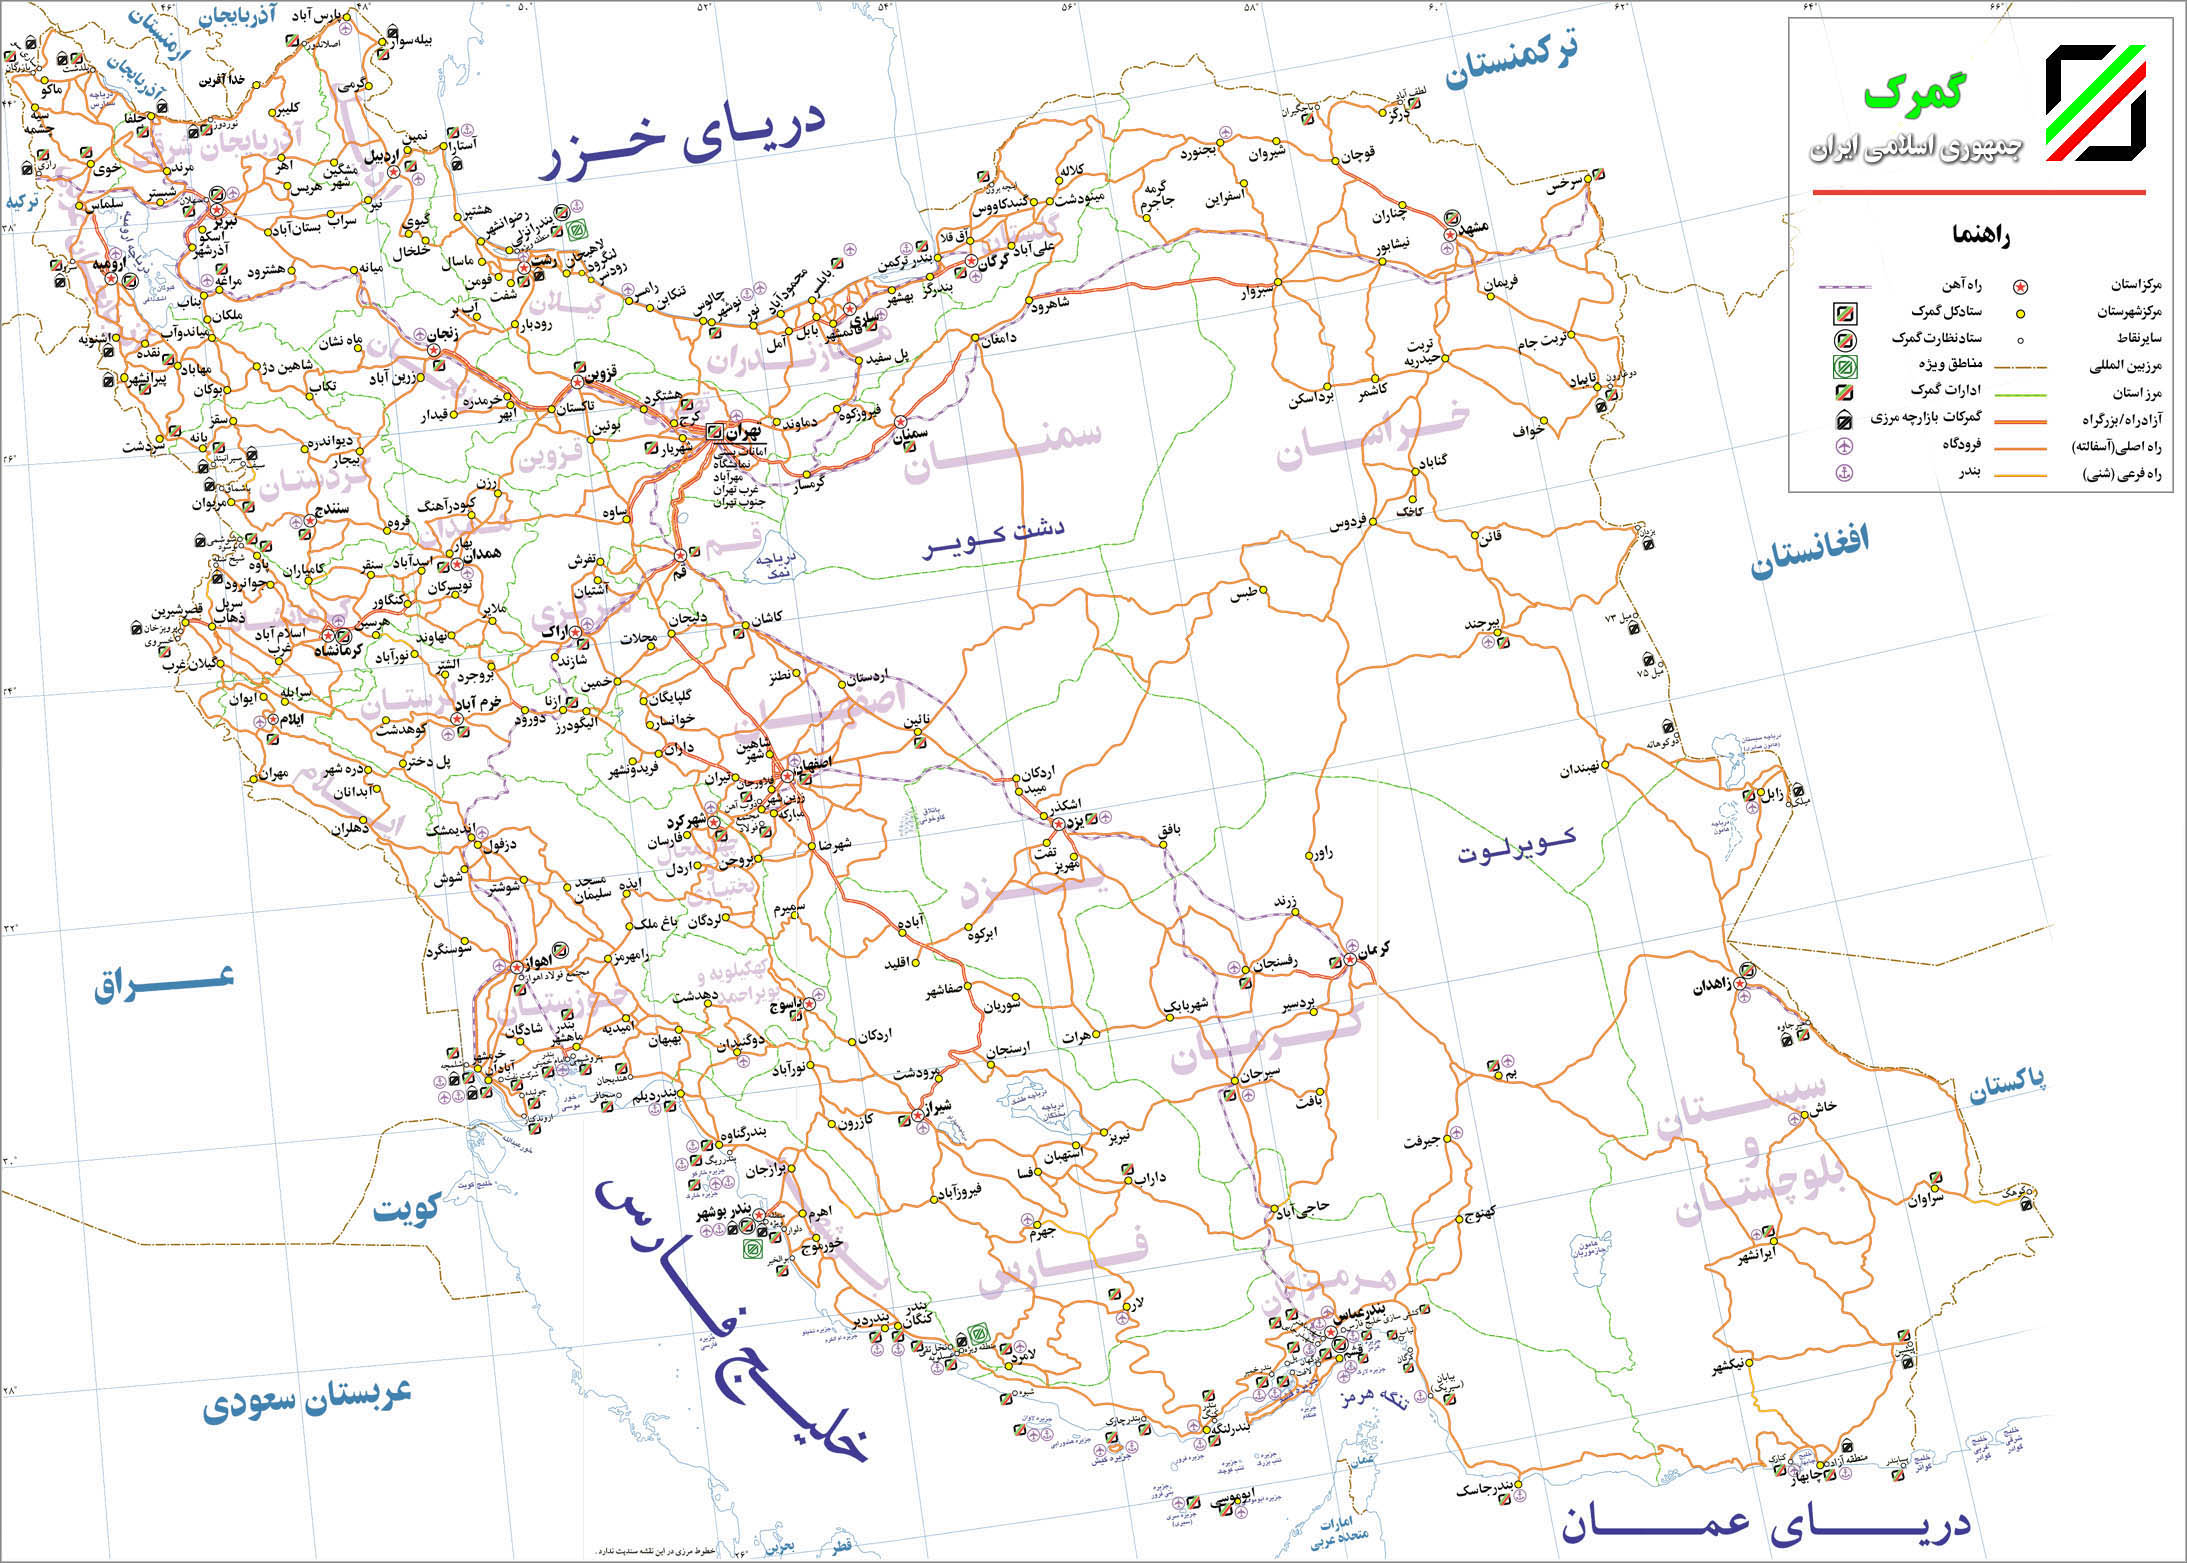 عکس نقشه ی ایران روی کره ی زمین